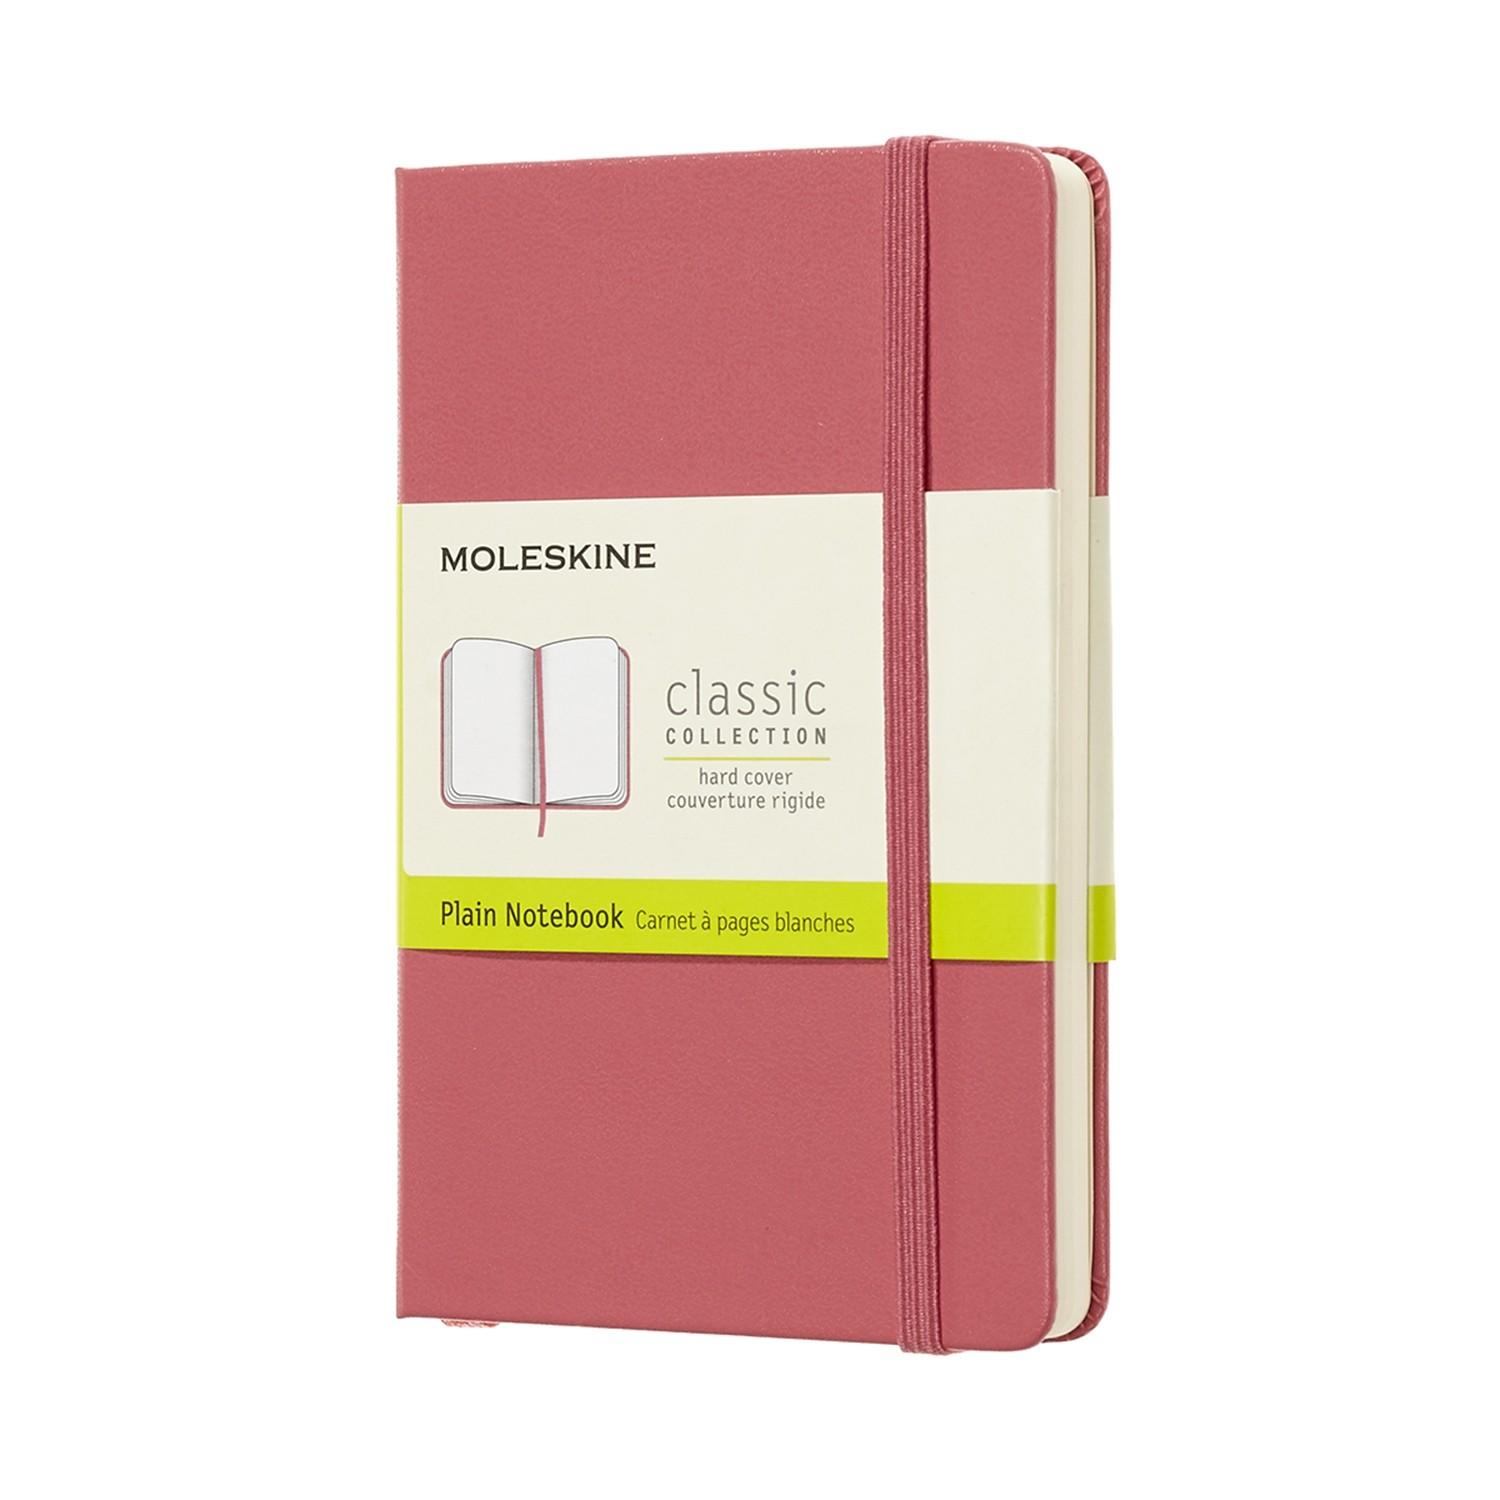 Moleskine Notebook Pocket Plain Daisy Pink Hard CoCOVER